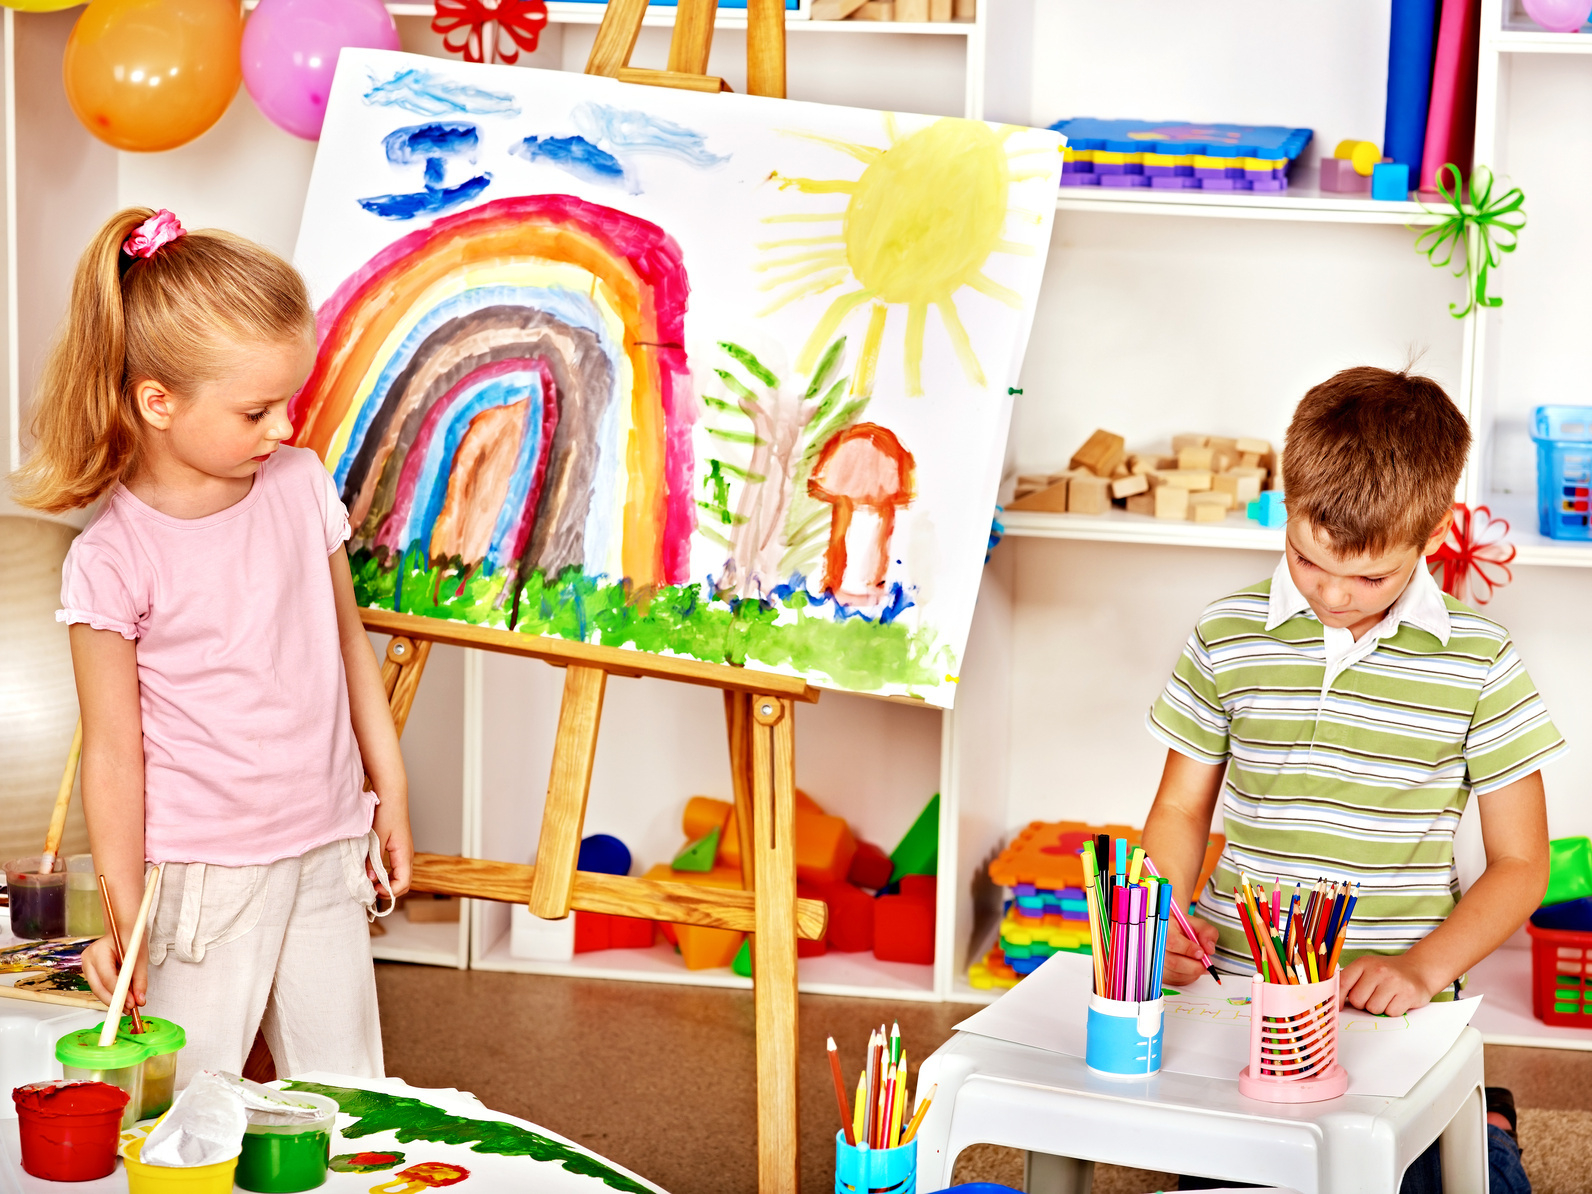 Kinderzimmer zum kreativen Zimmer machen - WARNHOLZ Immobilien GmbH hilft